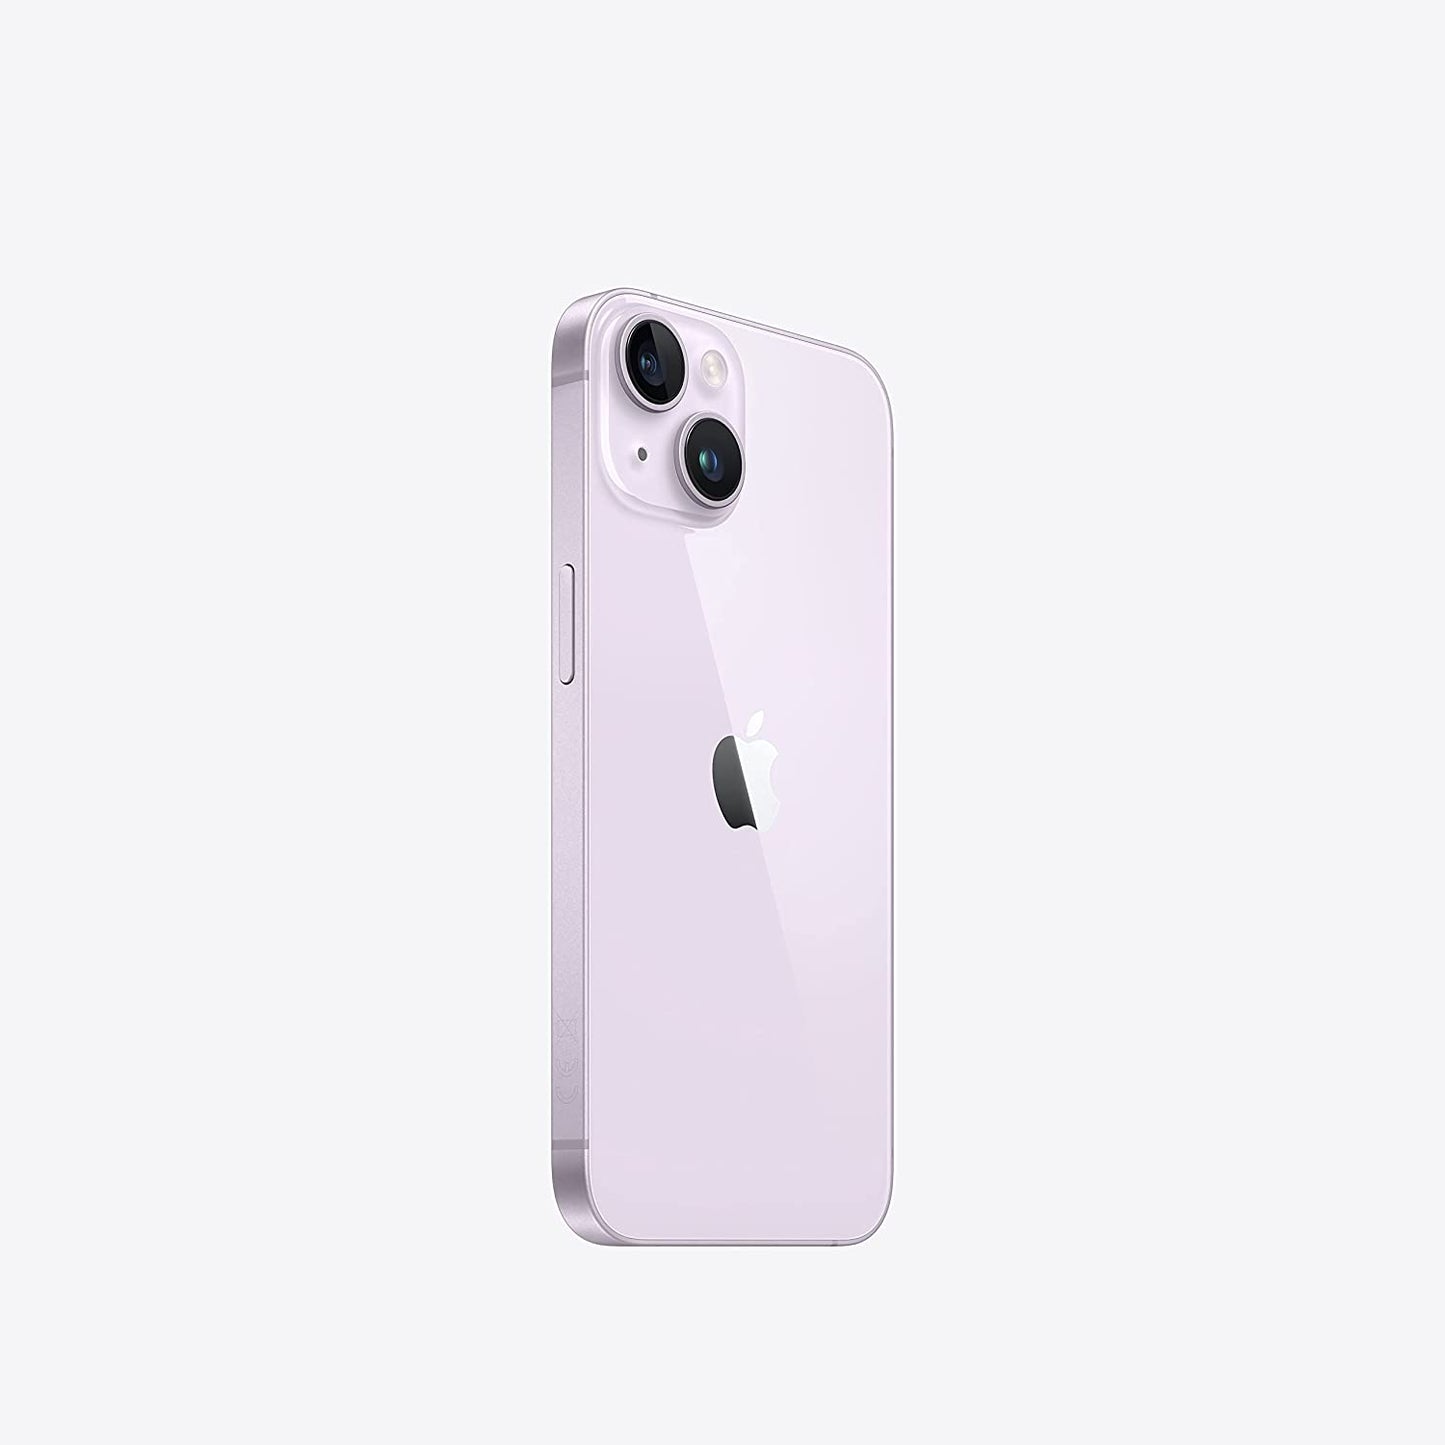 Original Apple iPhone 14 128GB Purple Color 5G Cellphone - Brand New 2 Nano SIM Card CN Version Smartphone